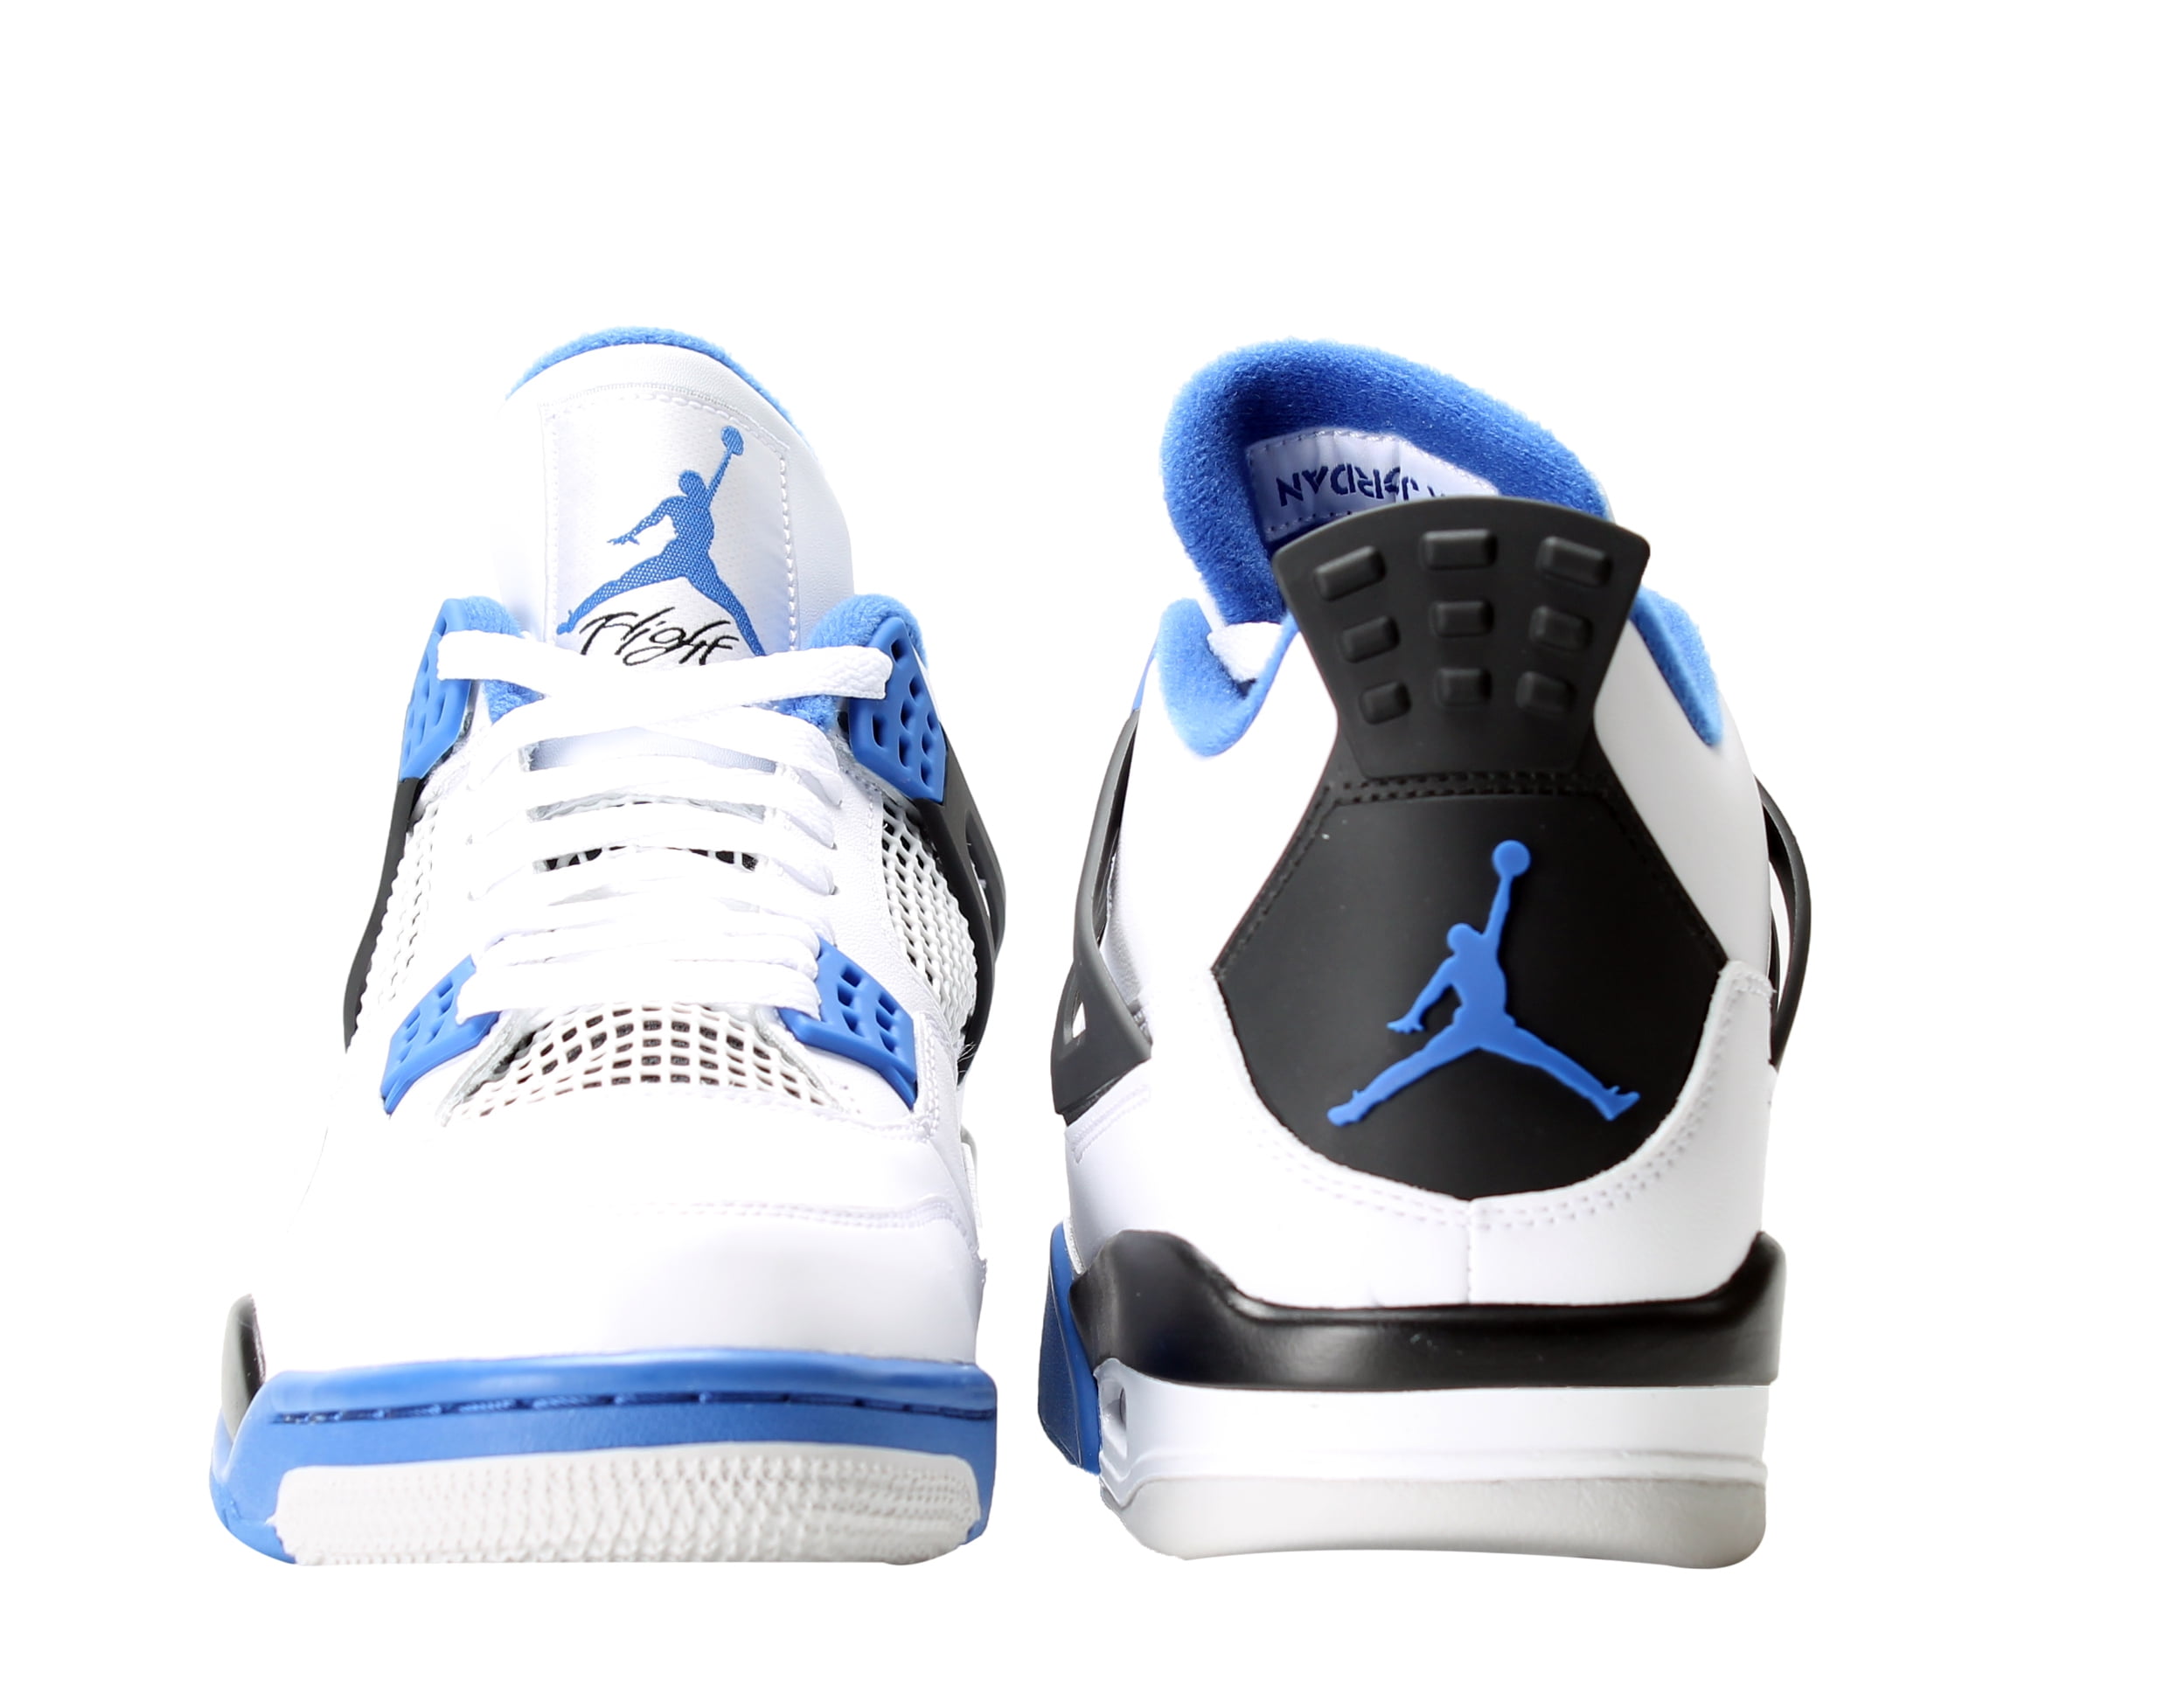 Nike SB x Air Jordan 4 Retro 'Black Cat' Price, and More Details: How Much  Will Jordan 4 'Black Cat' Cost? - Sportsmanor